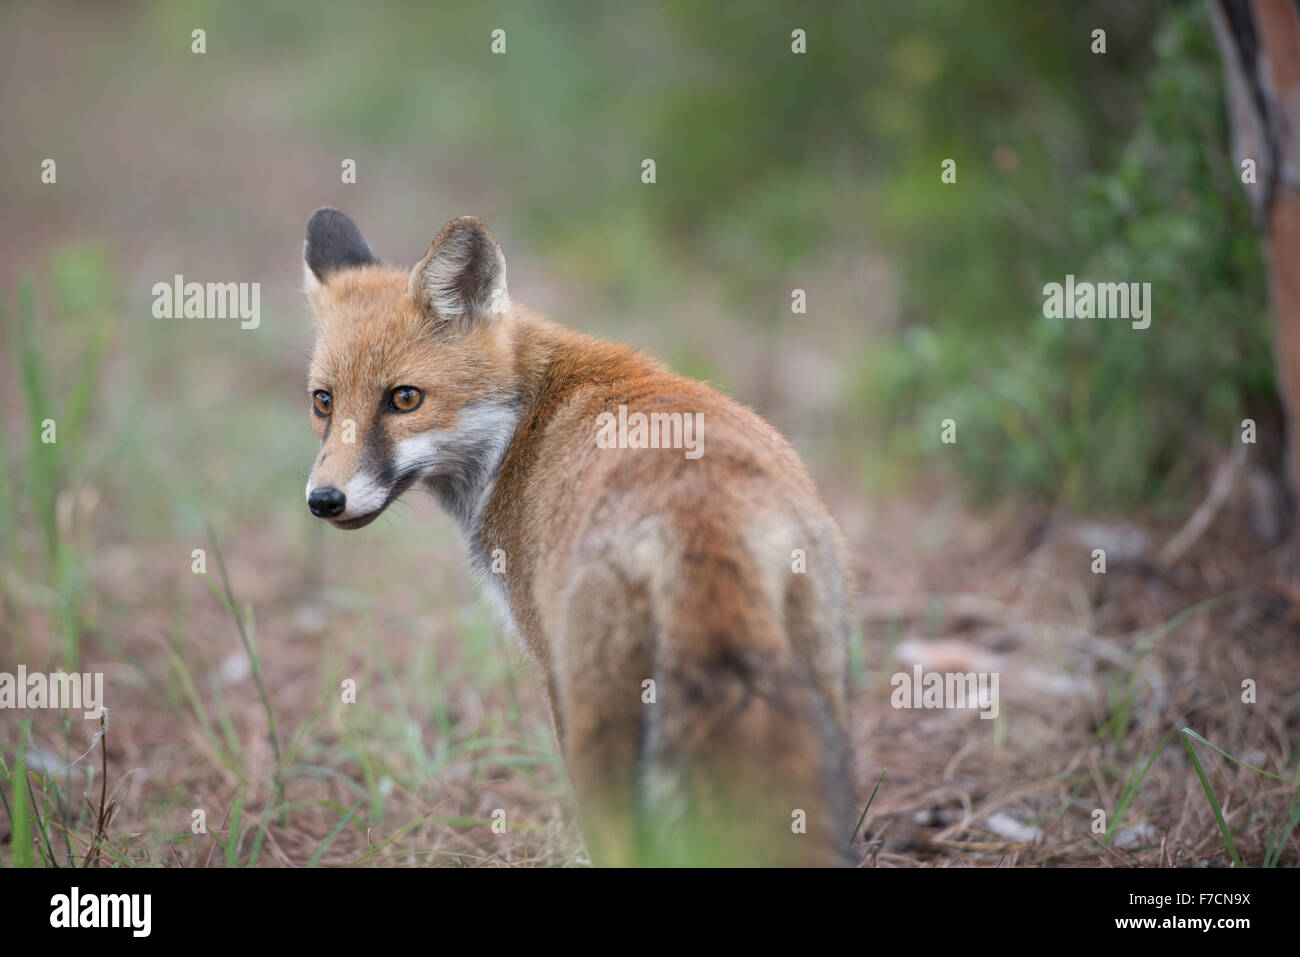 Fox in the wild. Stock Photo